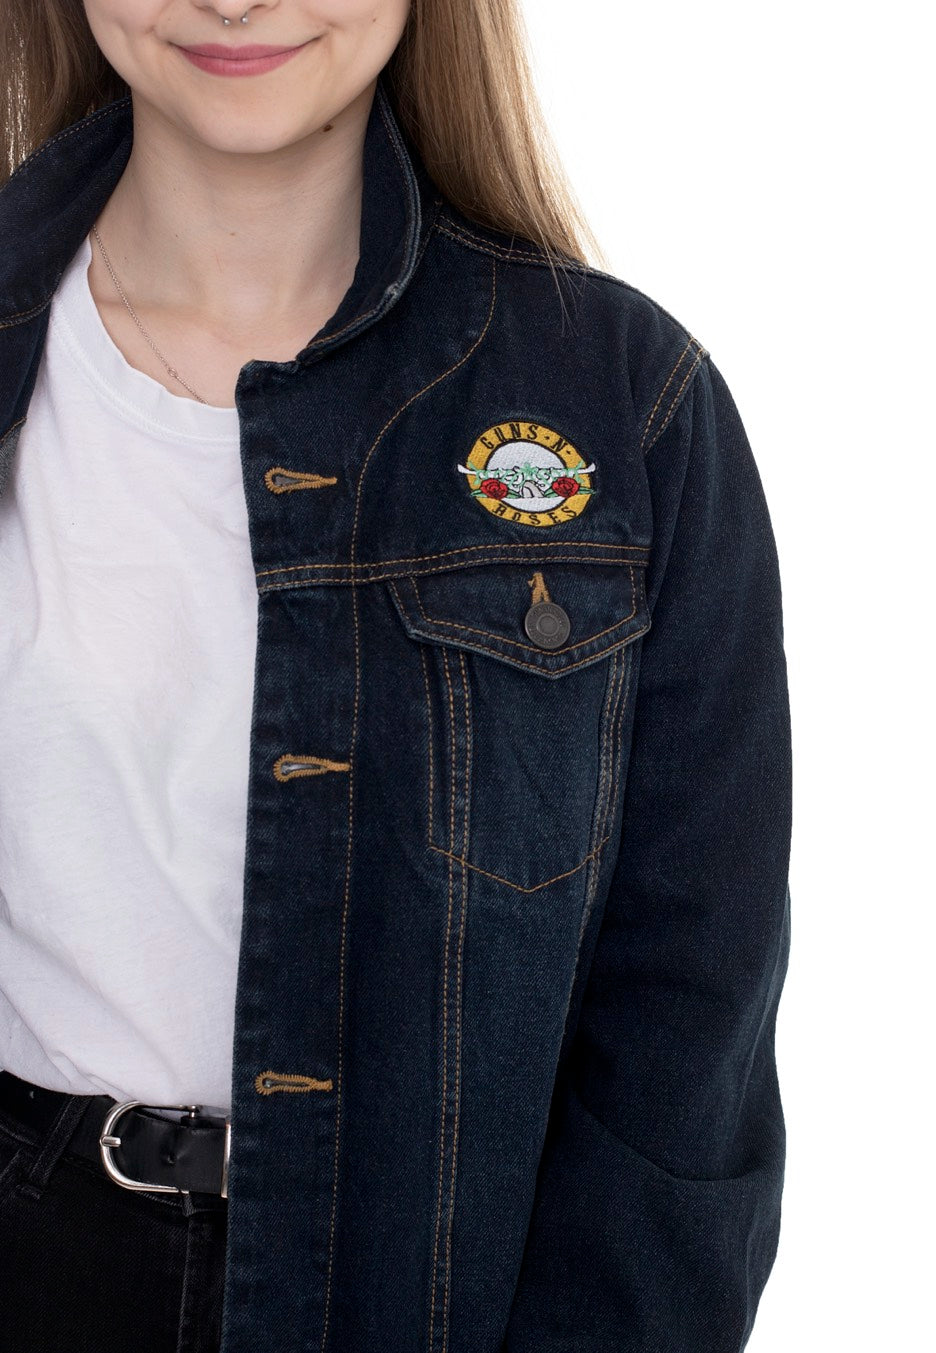 Guns N' Roses - Classic Logo - Jeans Jacket | Women-Image